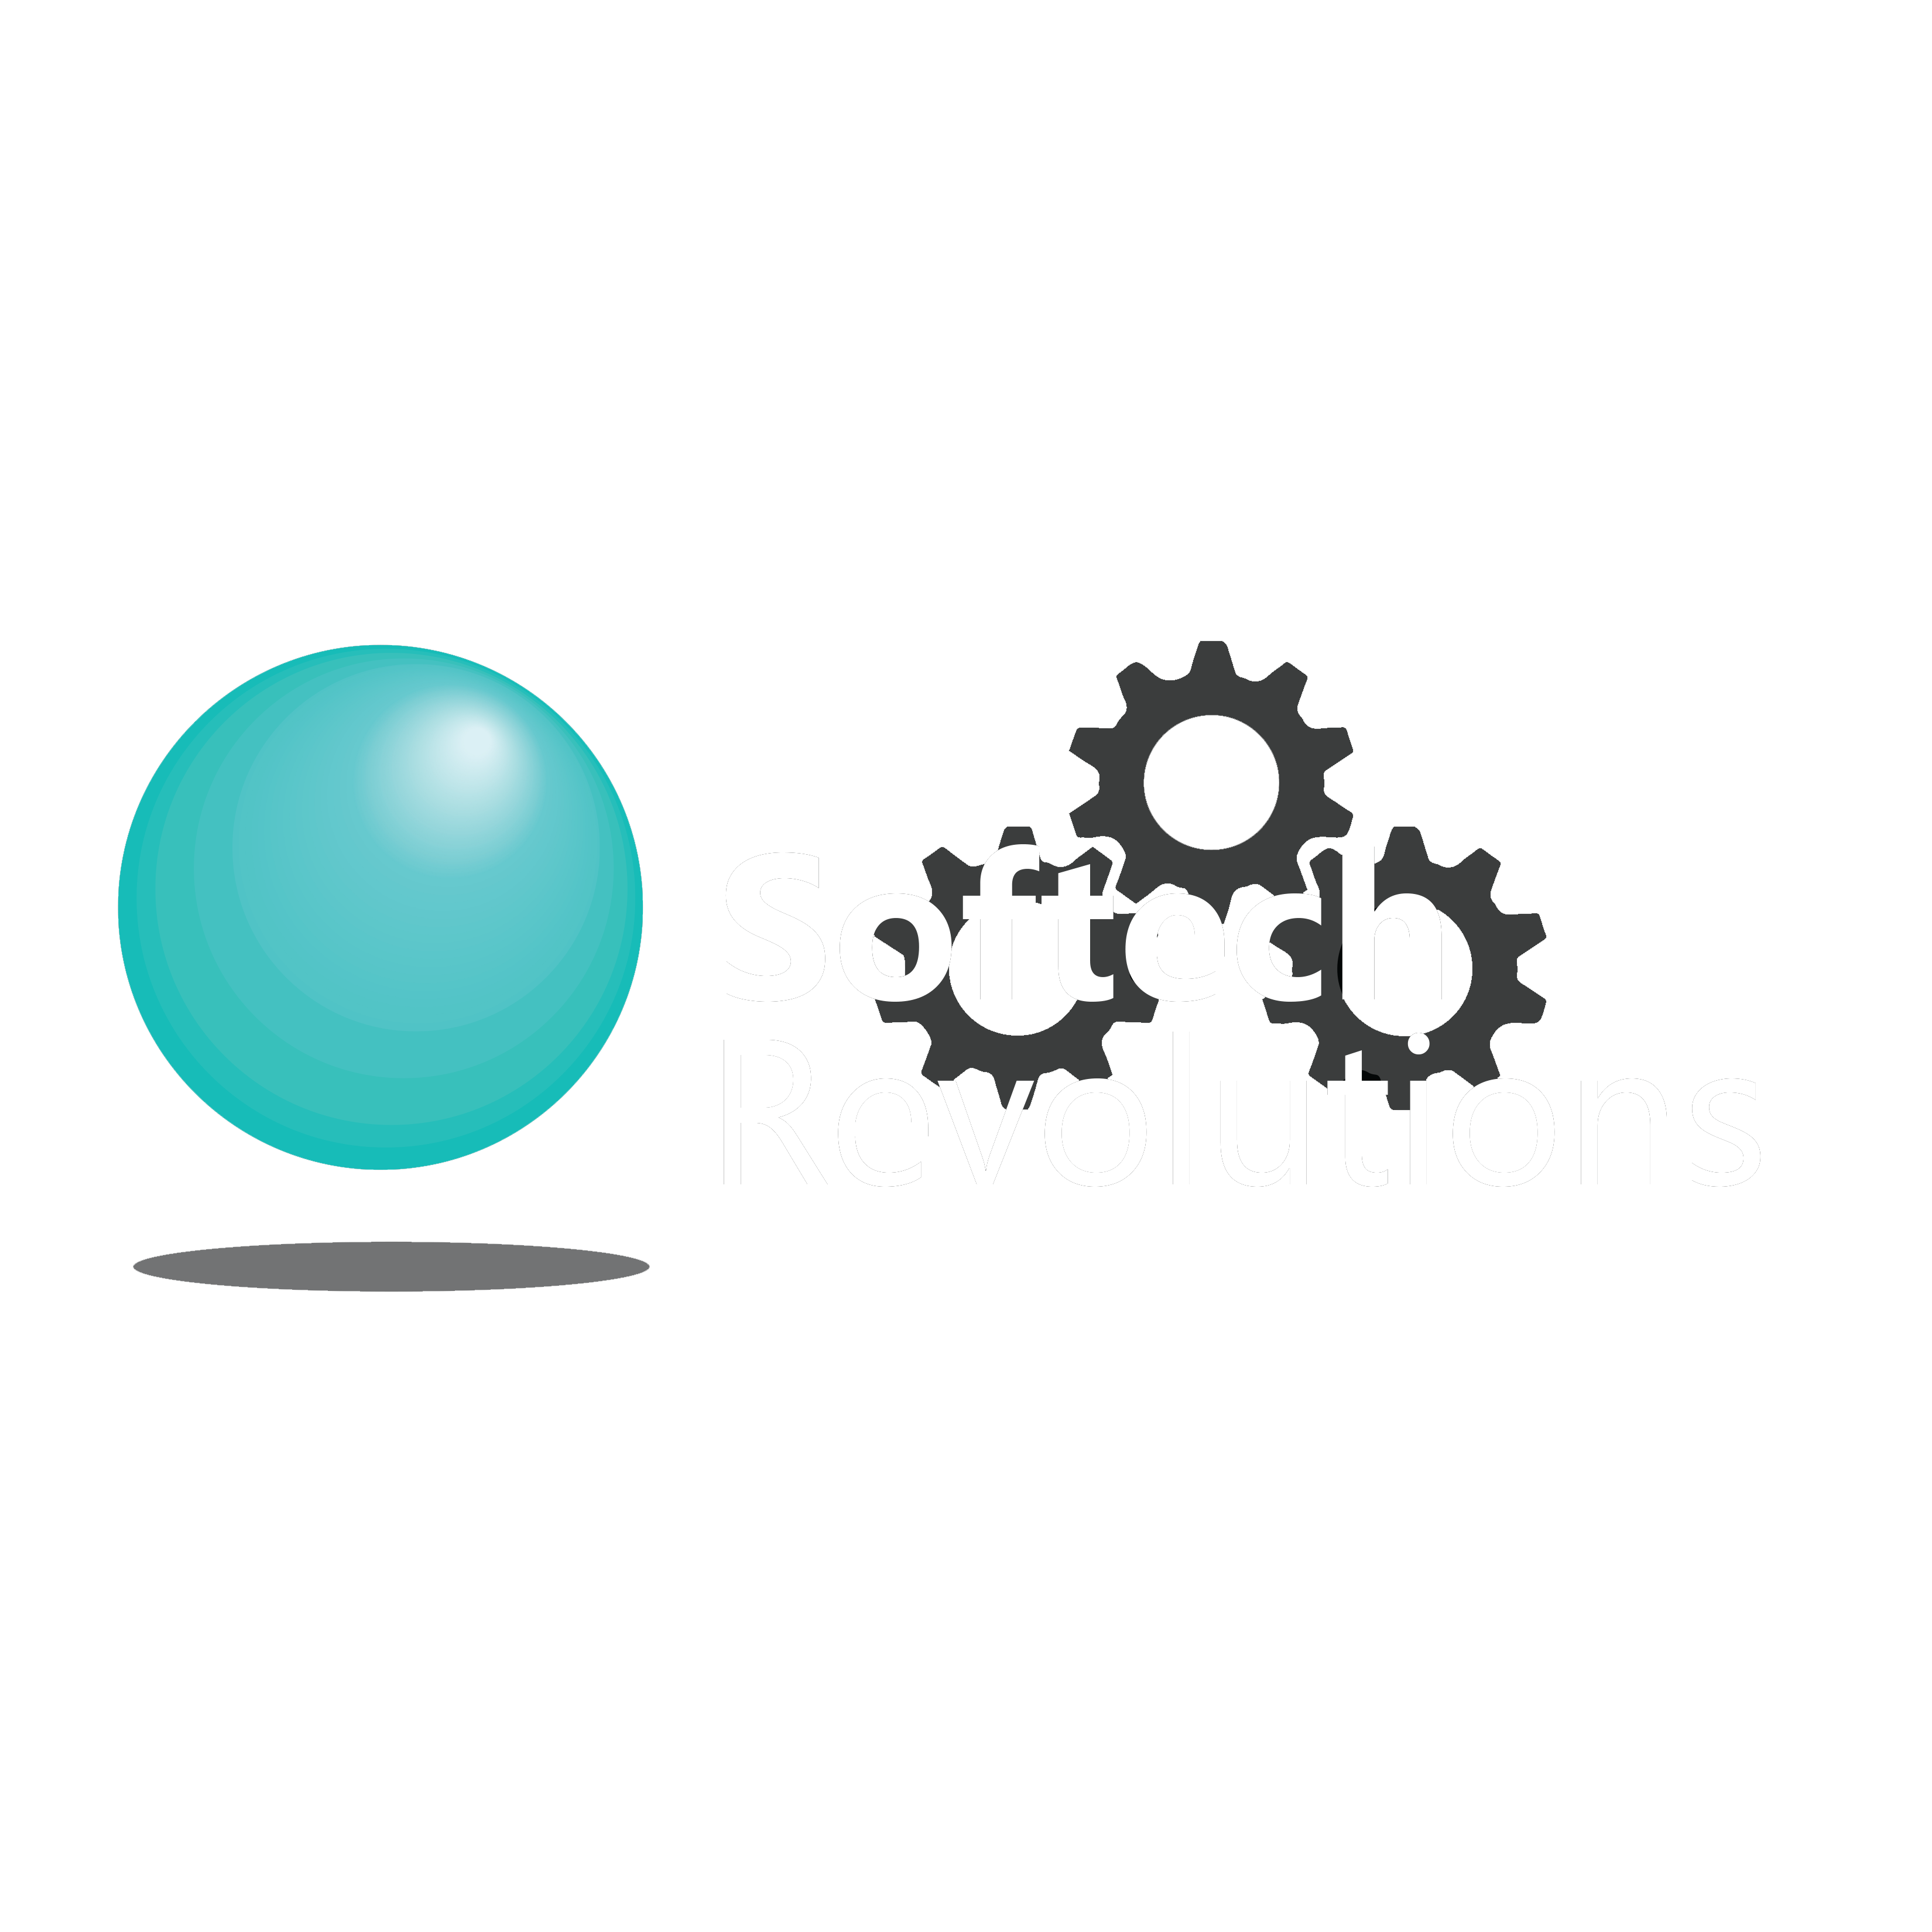 Softech Revolutions